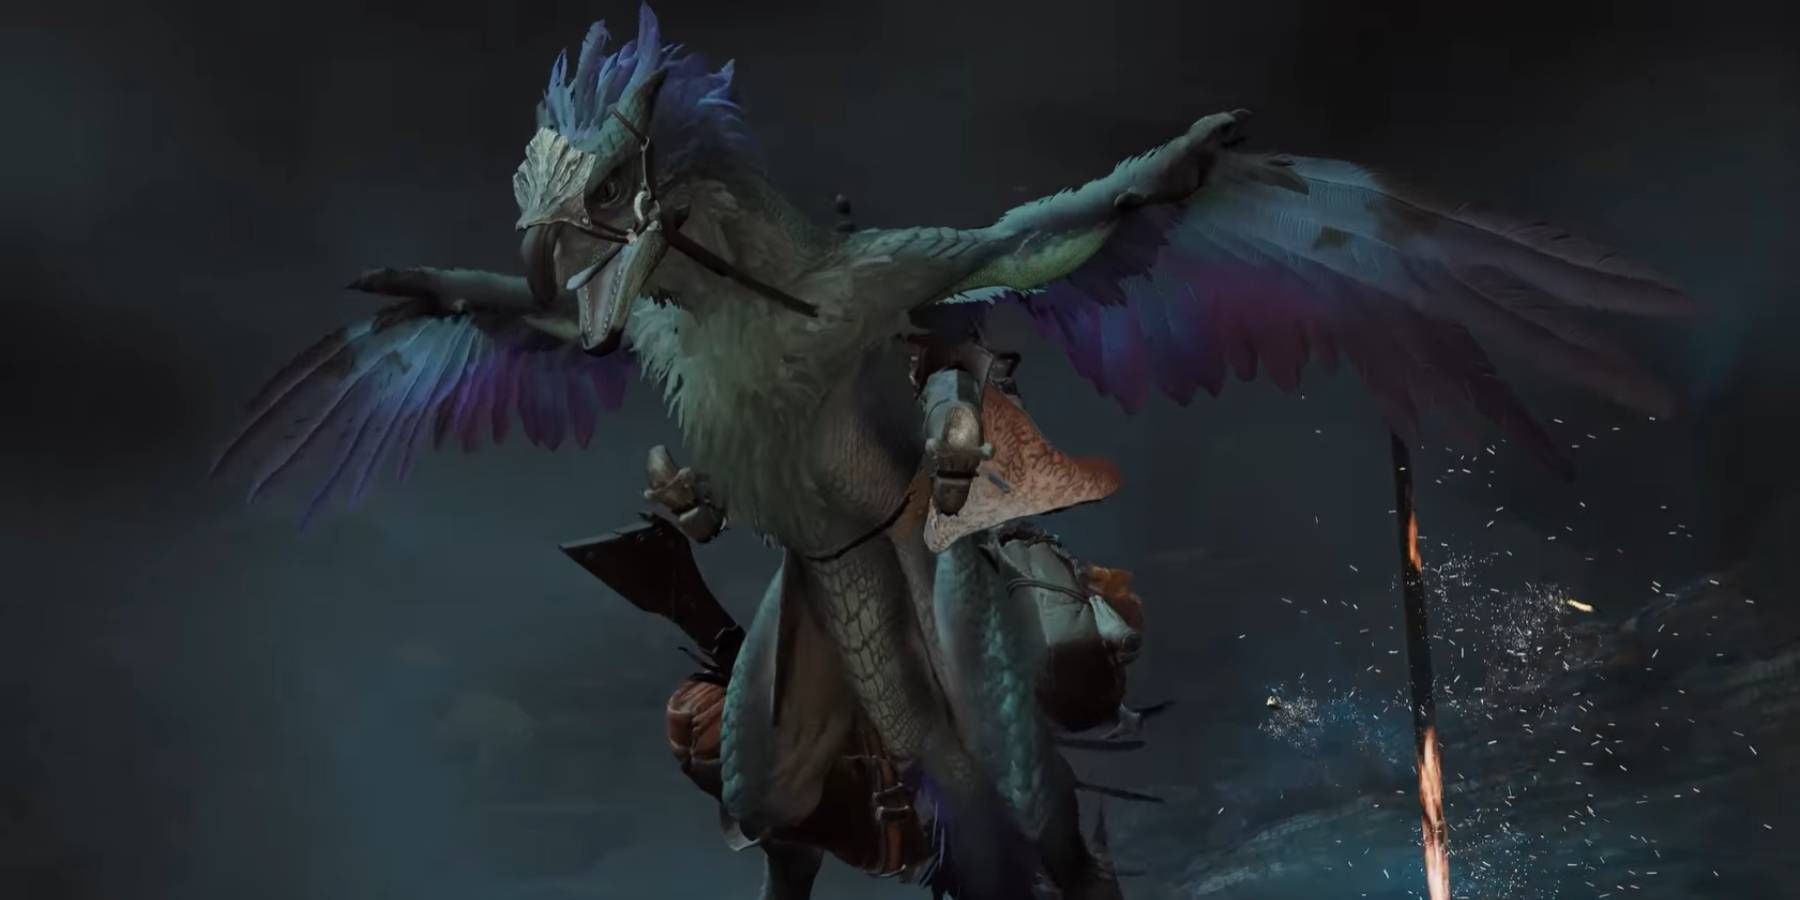 The player's mount taking flight in Monster Hunter Wilds' reveal trailer